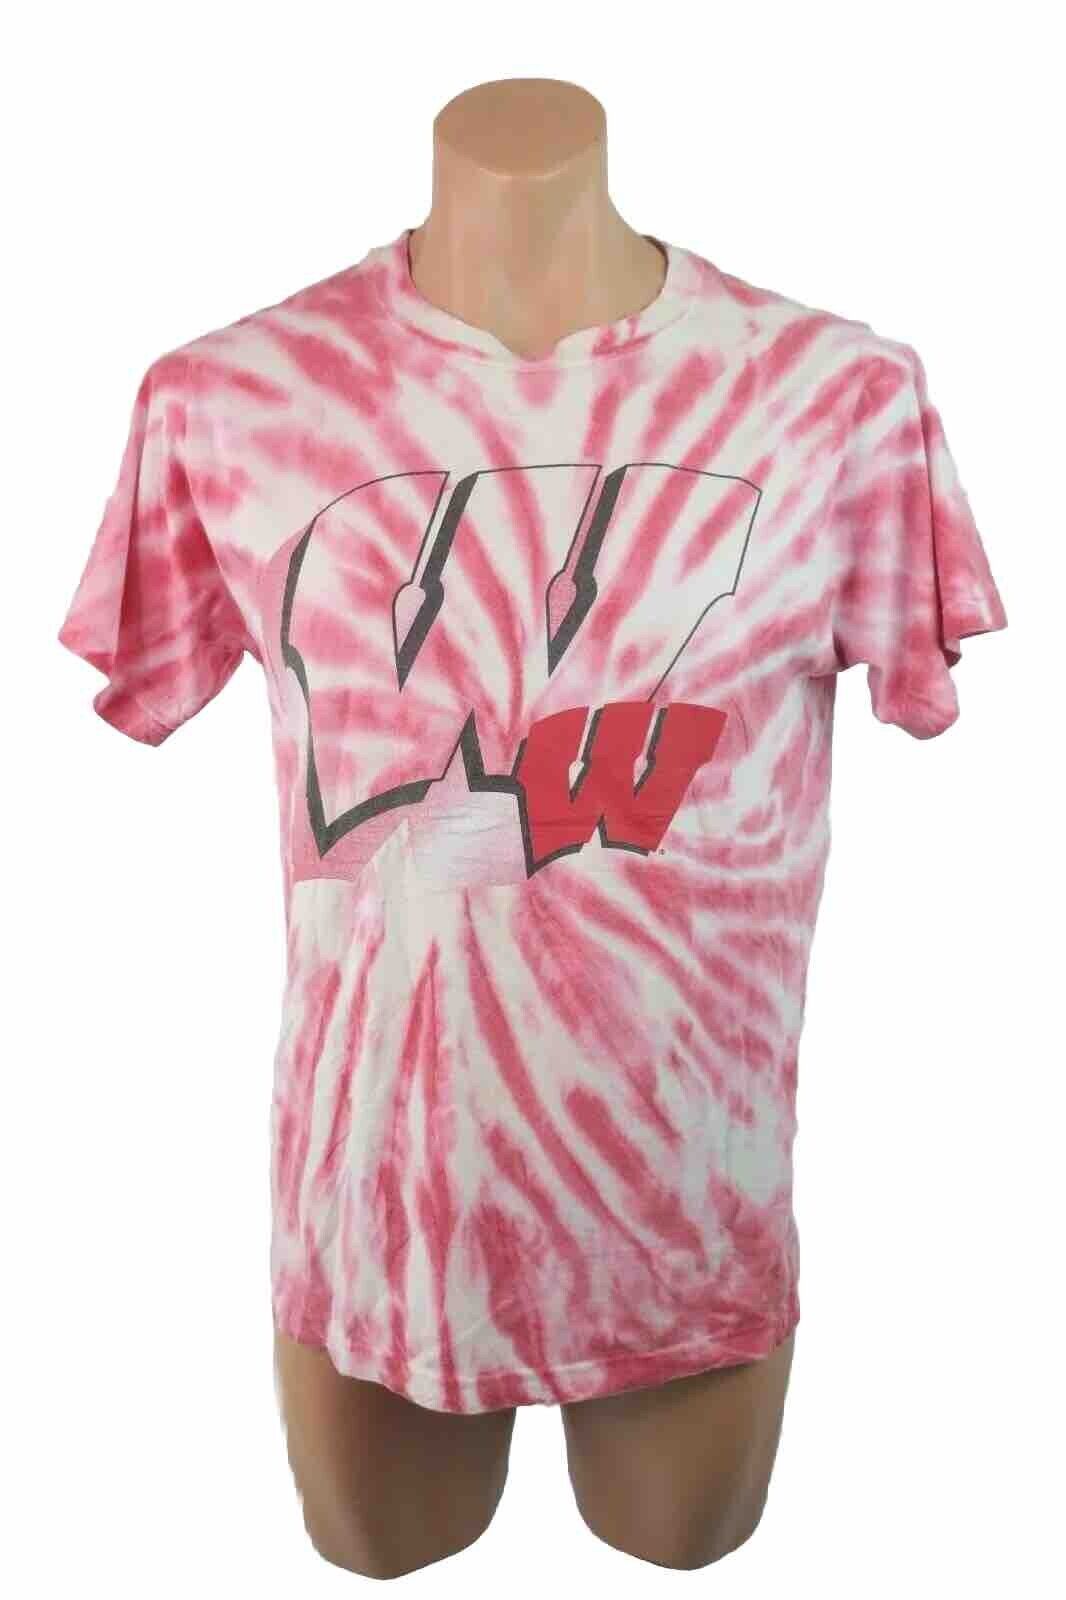 VTG 90s University of Wisconsin College Tie-Dye Shirt Sz XL All Over Print